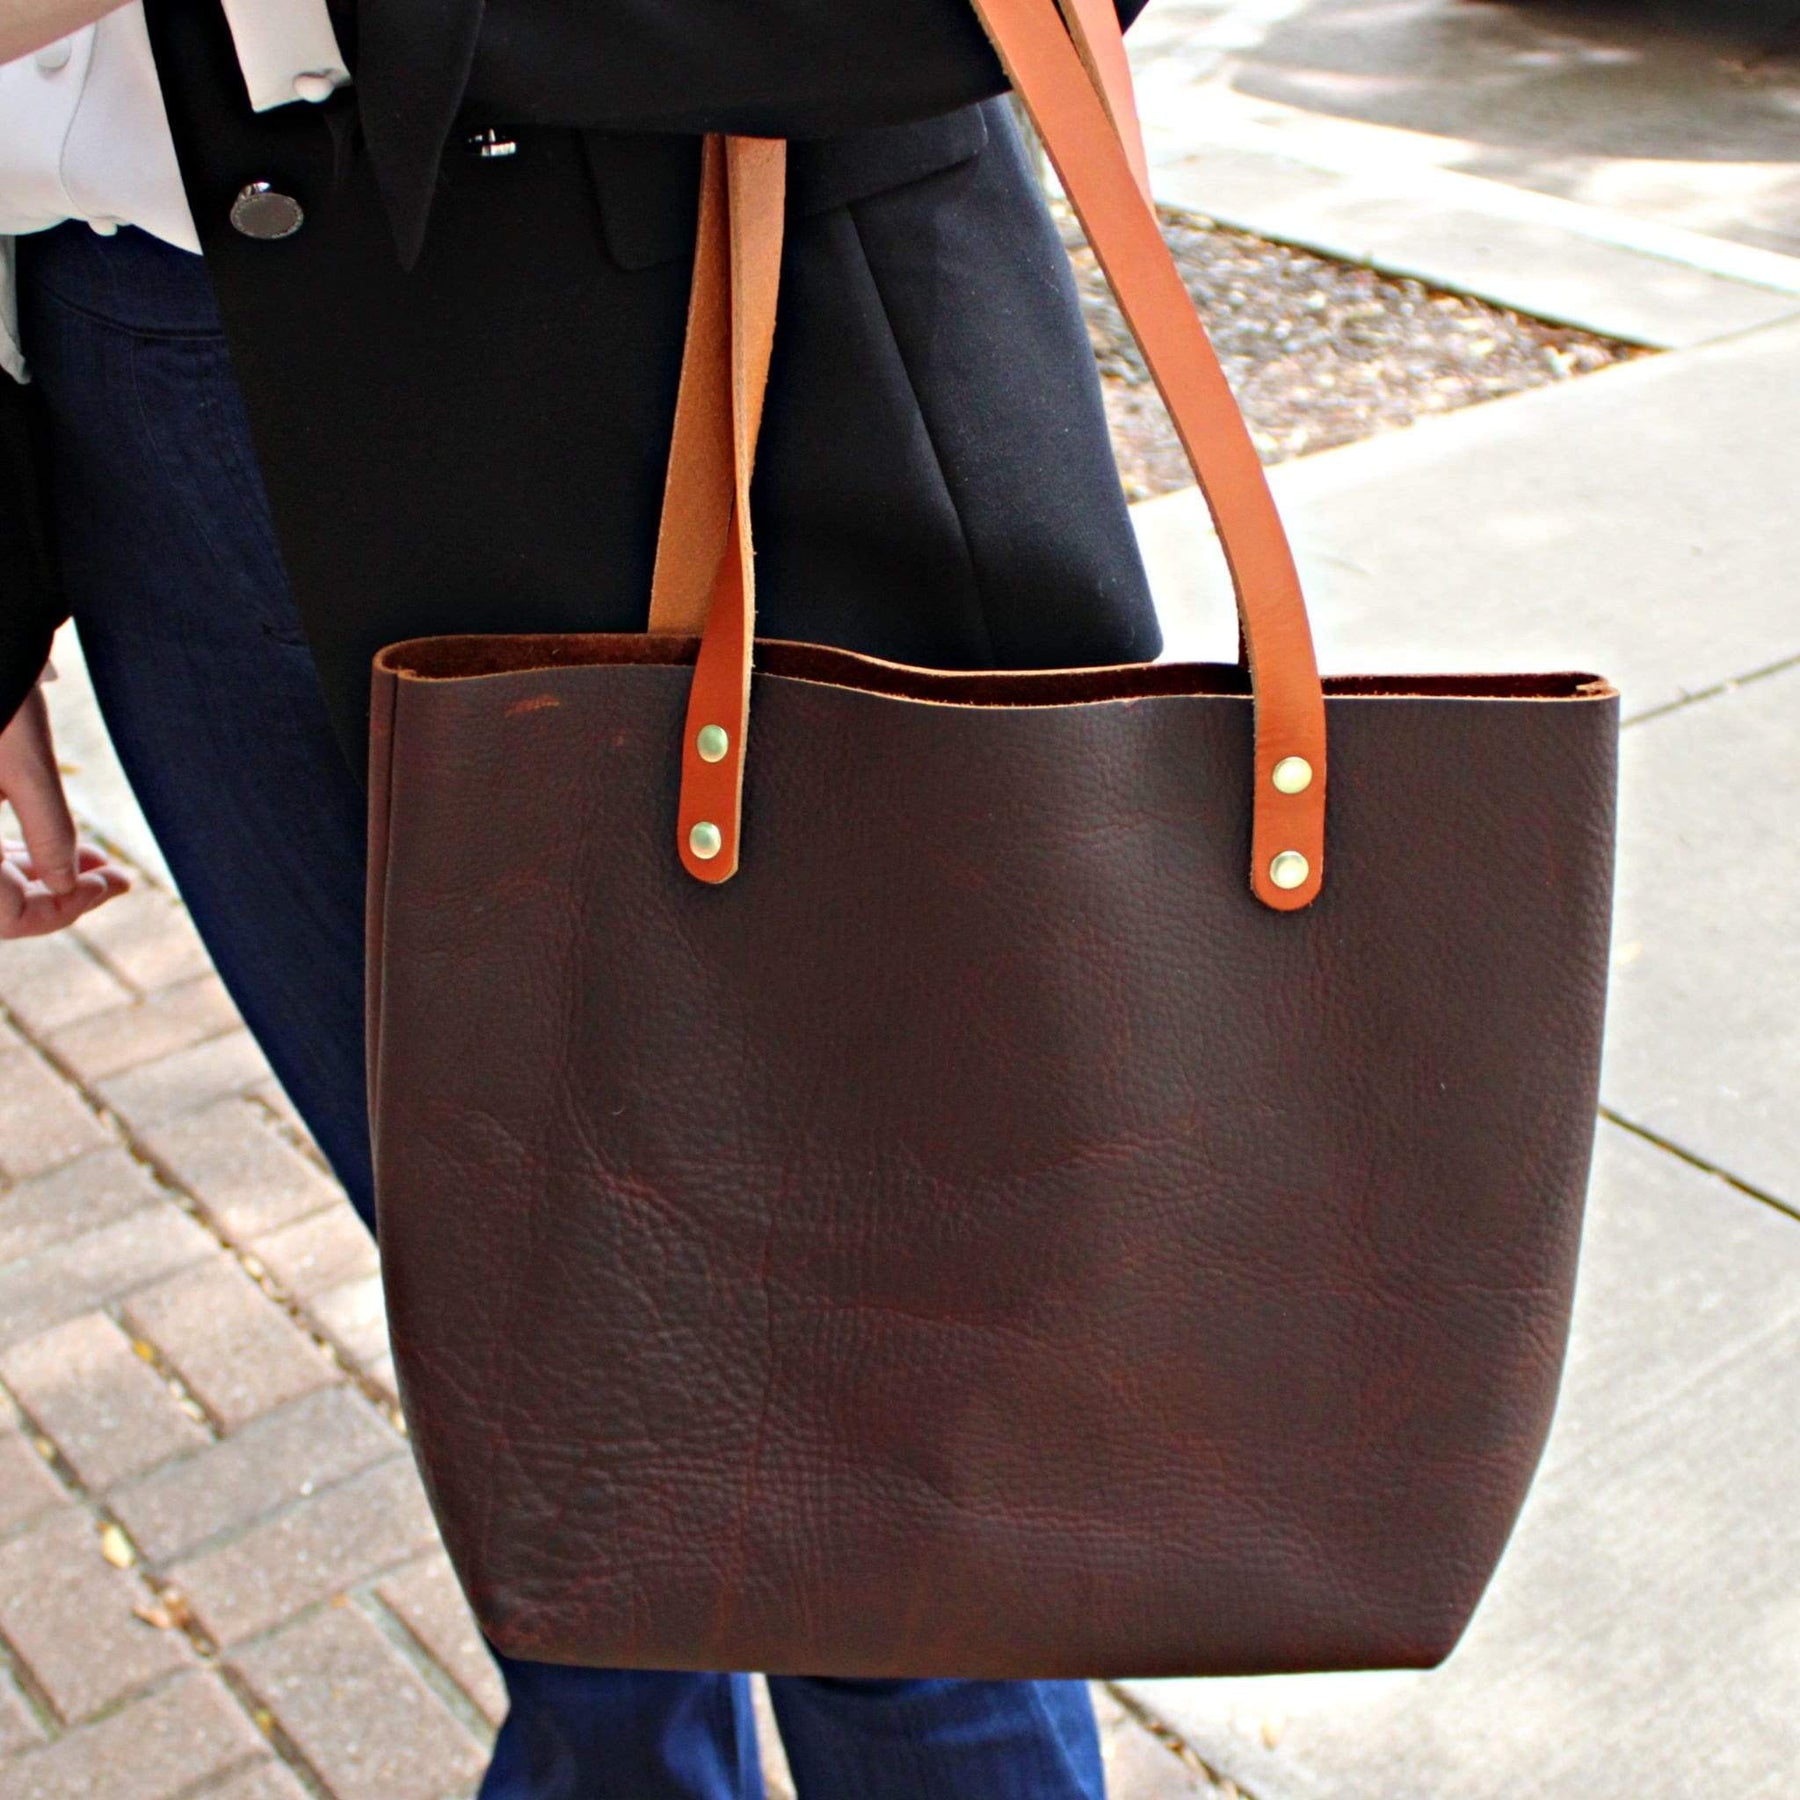 Women’s Leather Tote Bags in Dark Brown with Tan Handles| Kerry Noel None/Open / Matte Black / Tablet